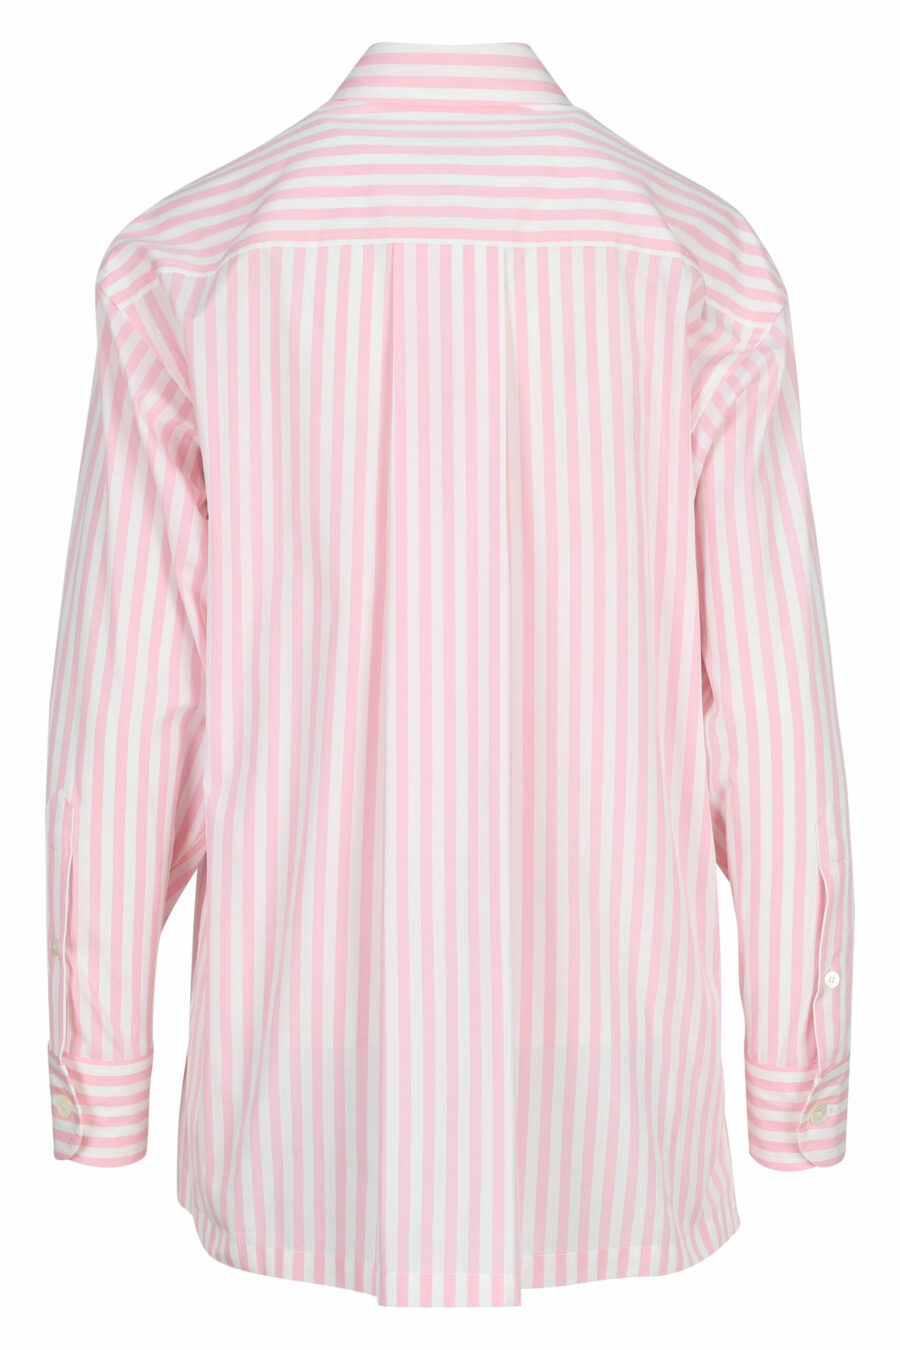 Oversize pink shirt with "boke flower" mini-logo - 3612230589674 1 scaled